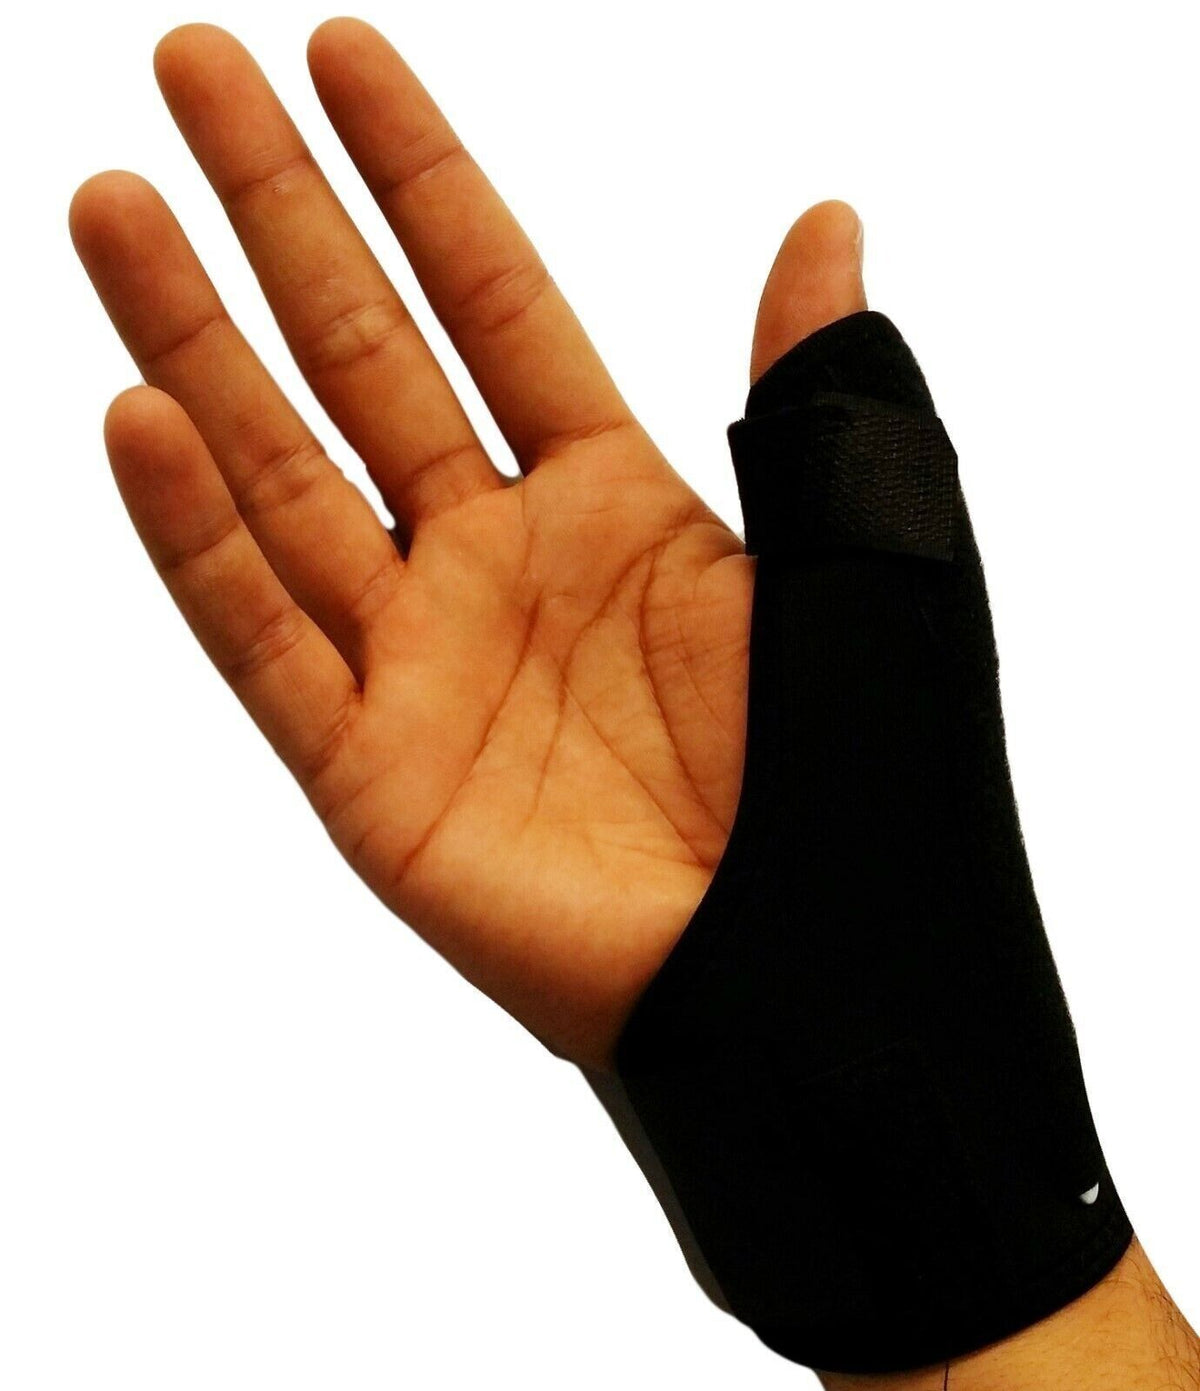 Thumb Spica Splint UK - Wrist Hand Brace Support Arthritis Carpal Sprain